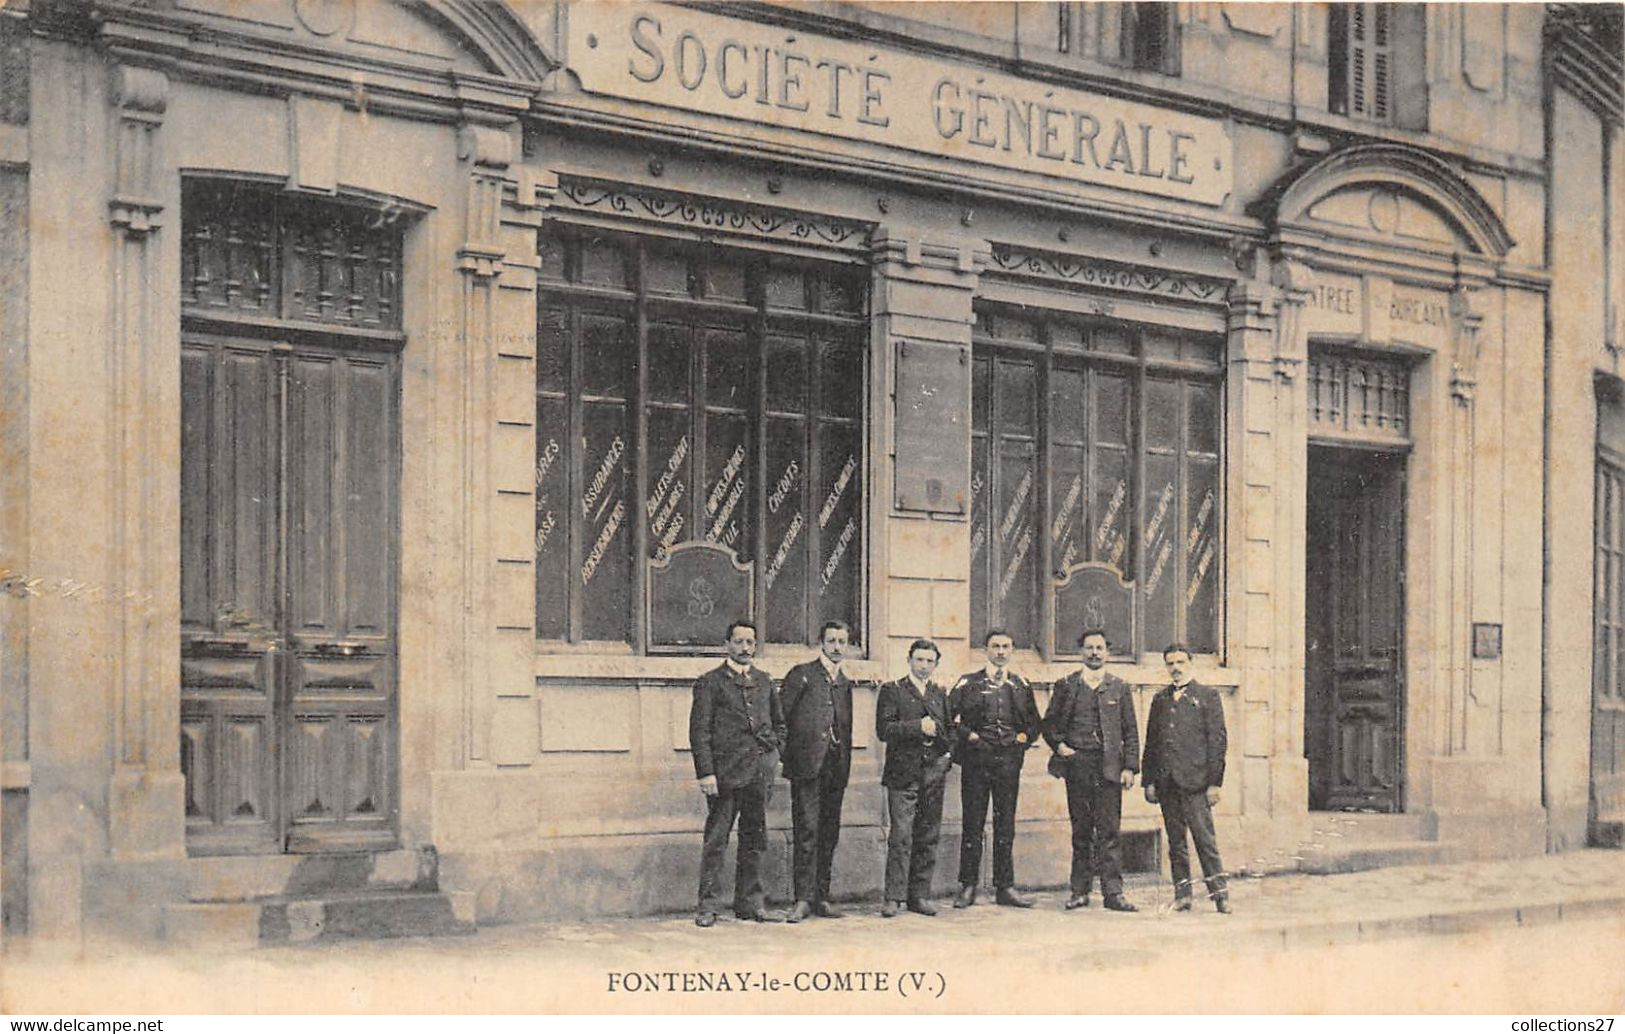 85-FONTENAY-LE-COMTE- SOCIETE GENERALE - Banche